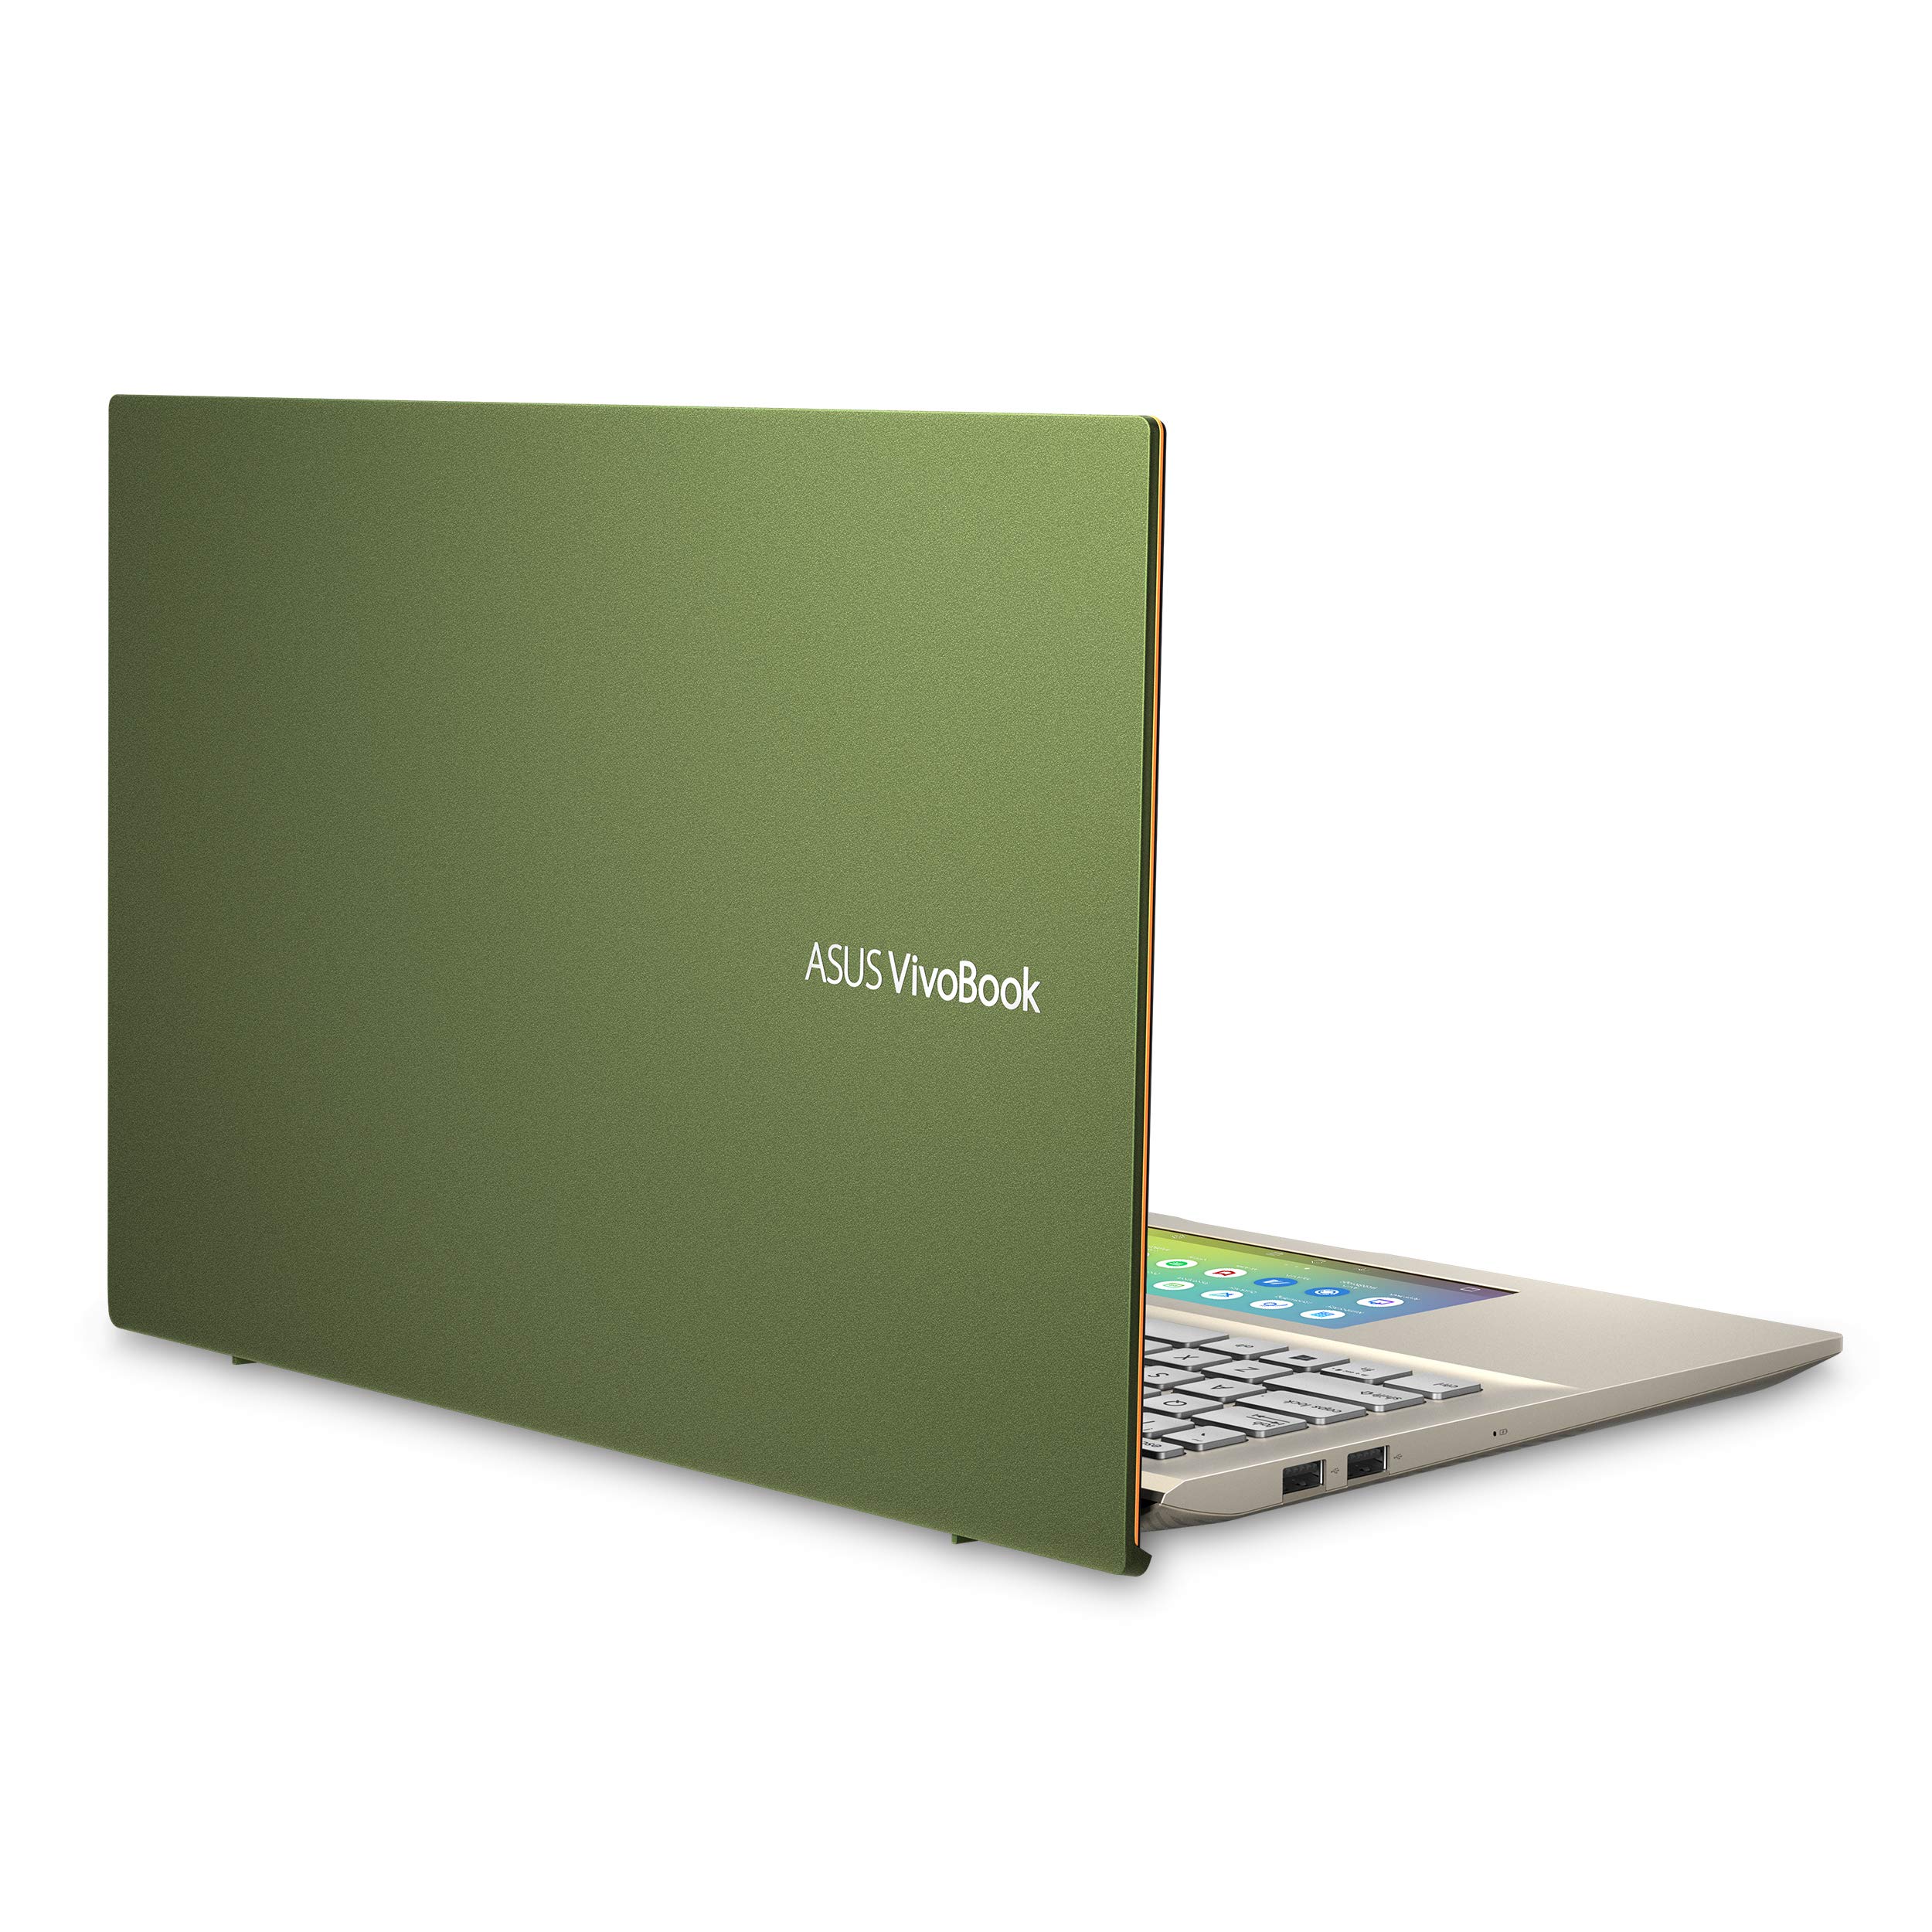 ASUS VivoBook S15 Thin & Light Laptop, 15.6” FHD, Intel Core i5-8265U CPU, 8GB DDR4 RAM, PCIe NVMe 512GB SSD, Windows 10 Home, S532FA-DB55-GN, Moss Green